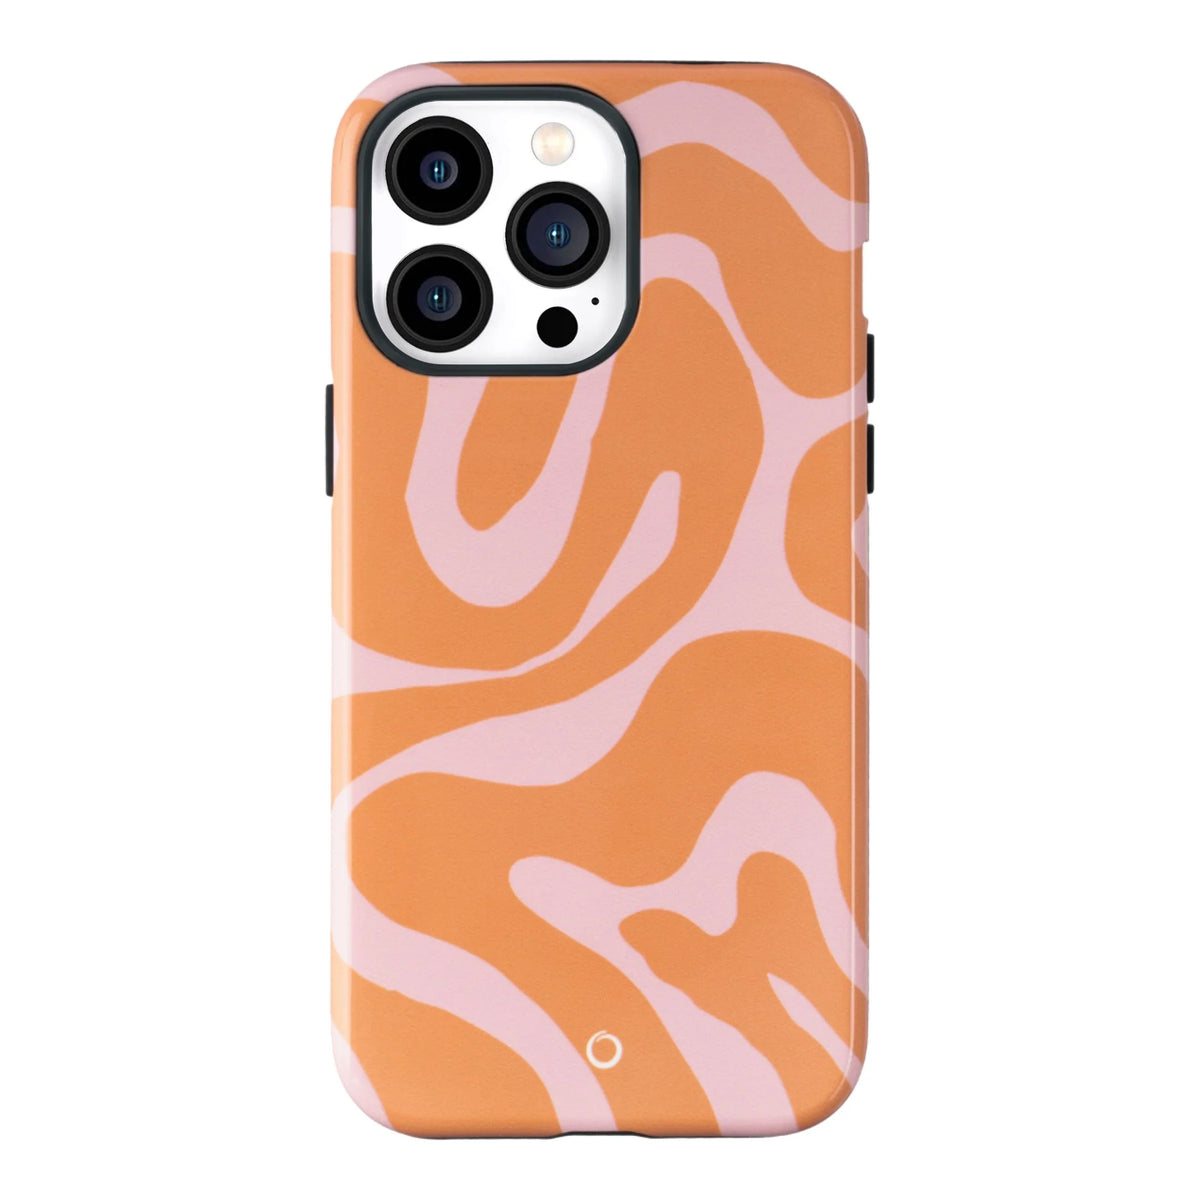 Orange Swirl iPhone Case